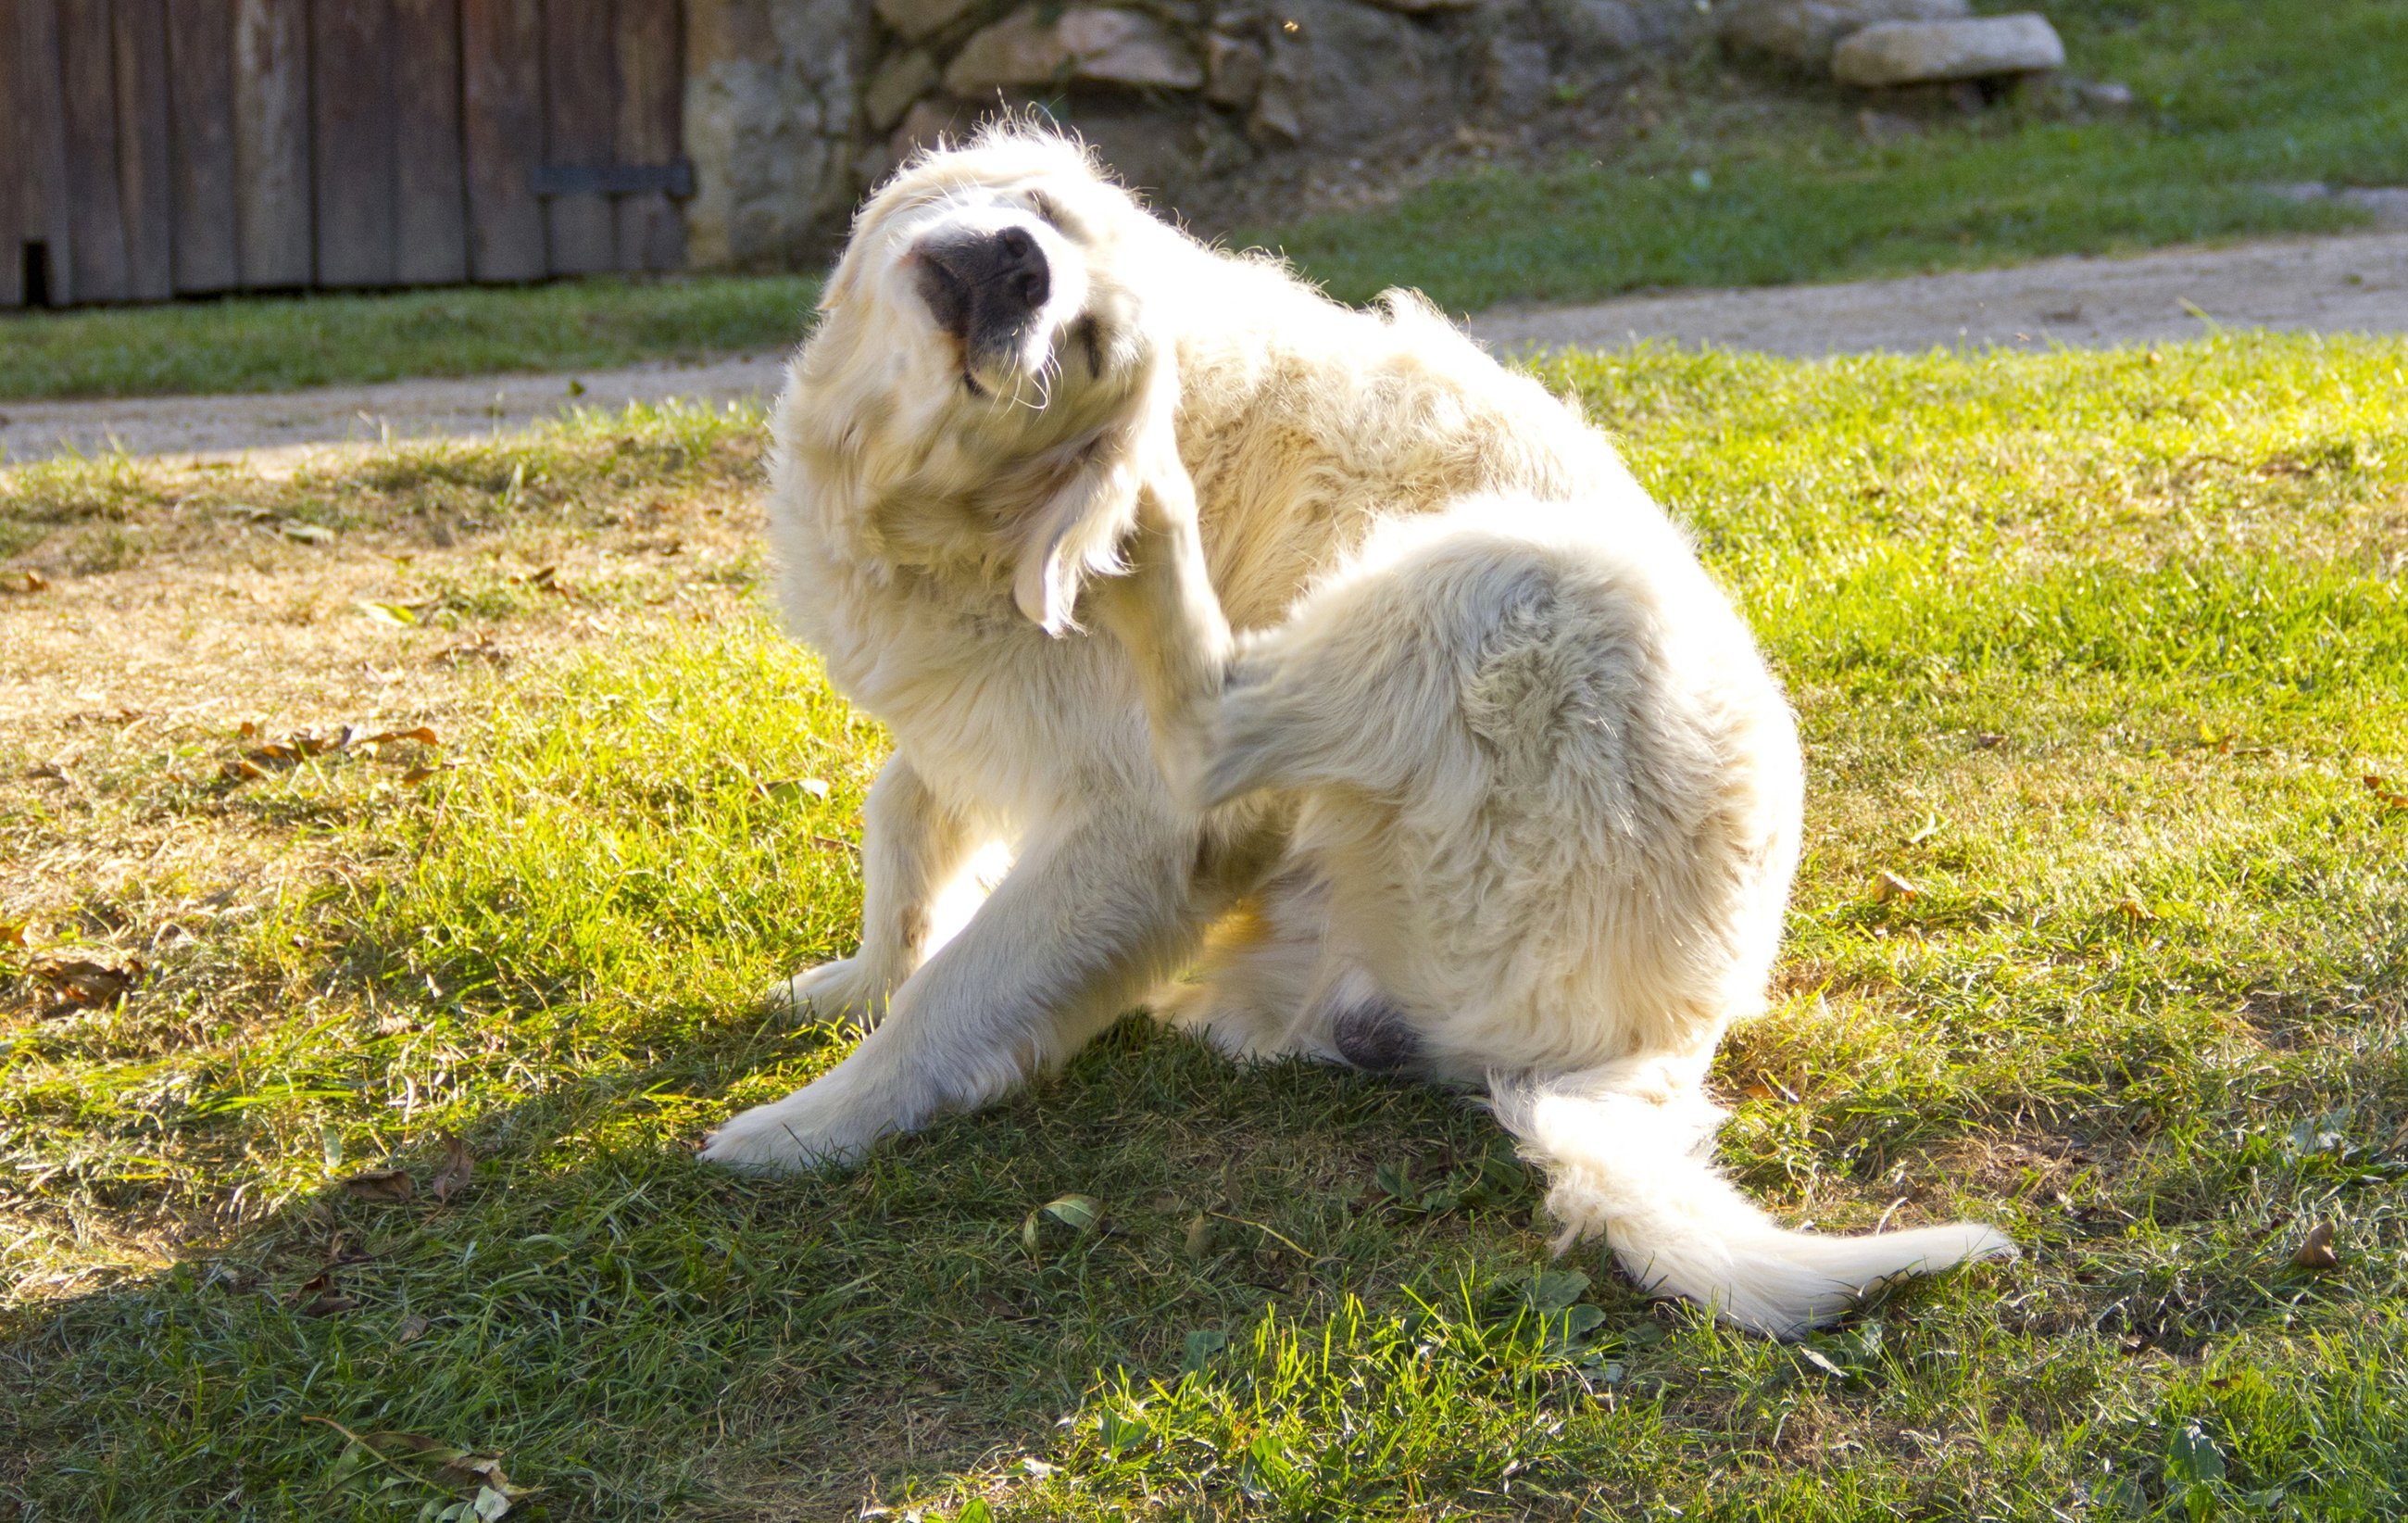  A white dog scratching | Photo: Shutterstock